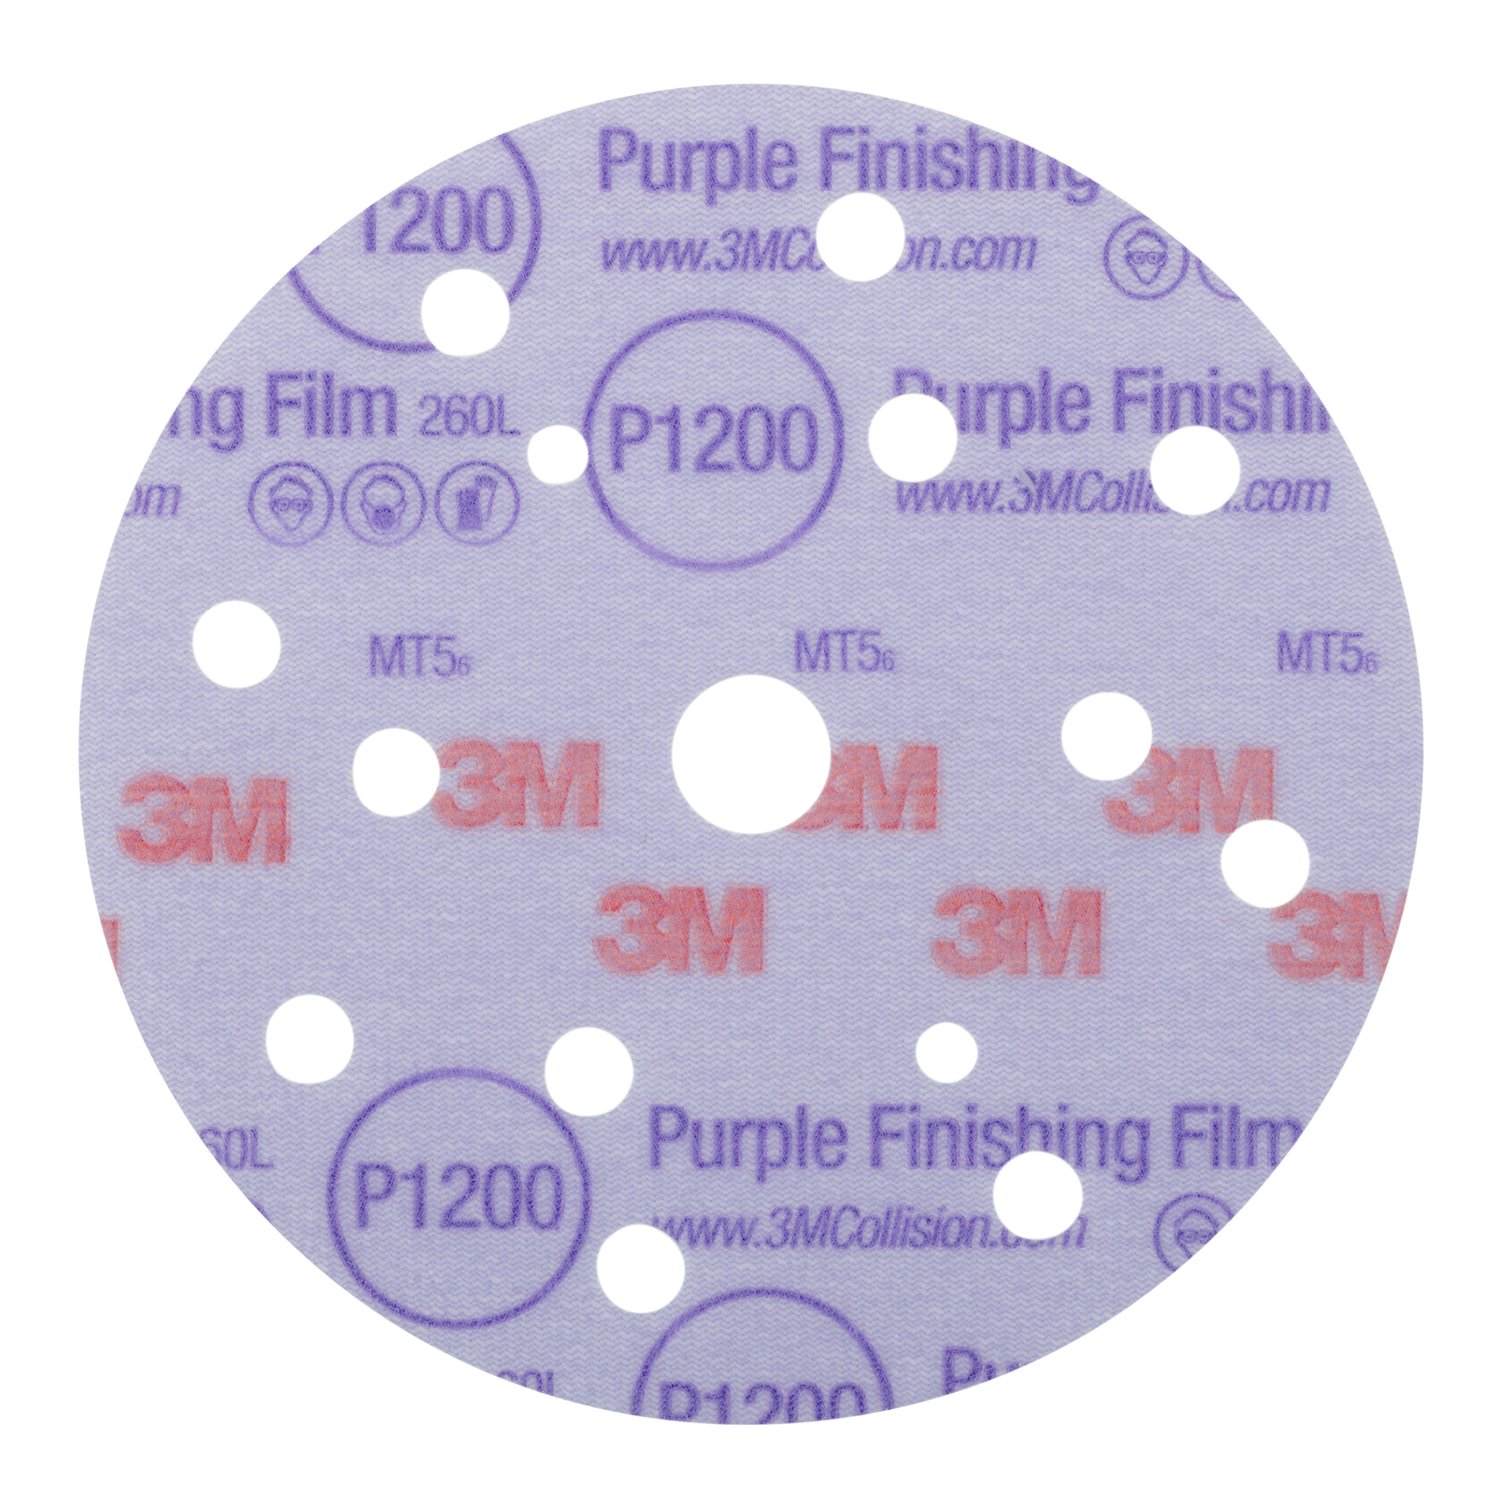 7100123052 - 3M Hookit Purple Finishing Film Abrasive Disc 260L, 51158, 6 in, Dust
Free, P1200, 50 discs per carton, 4 cartons per case